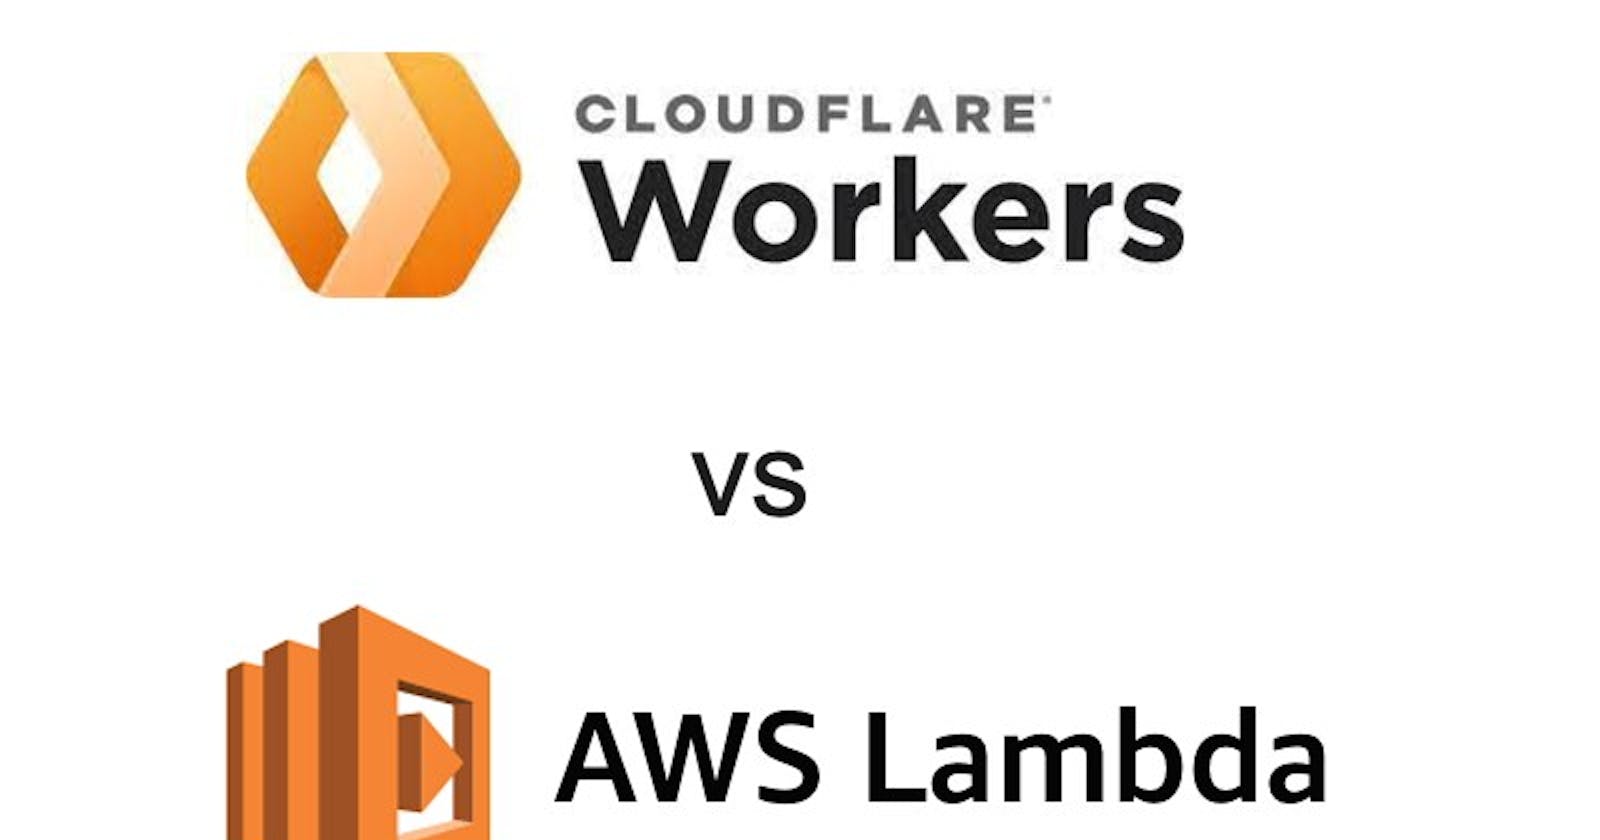 AWS Lambda vs Cloudflare Workers